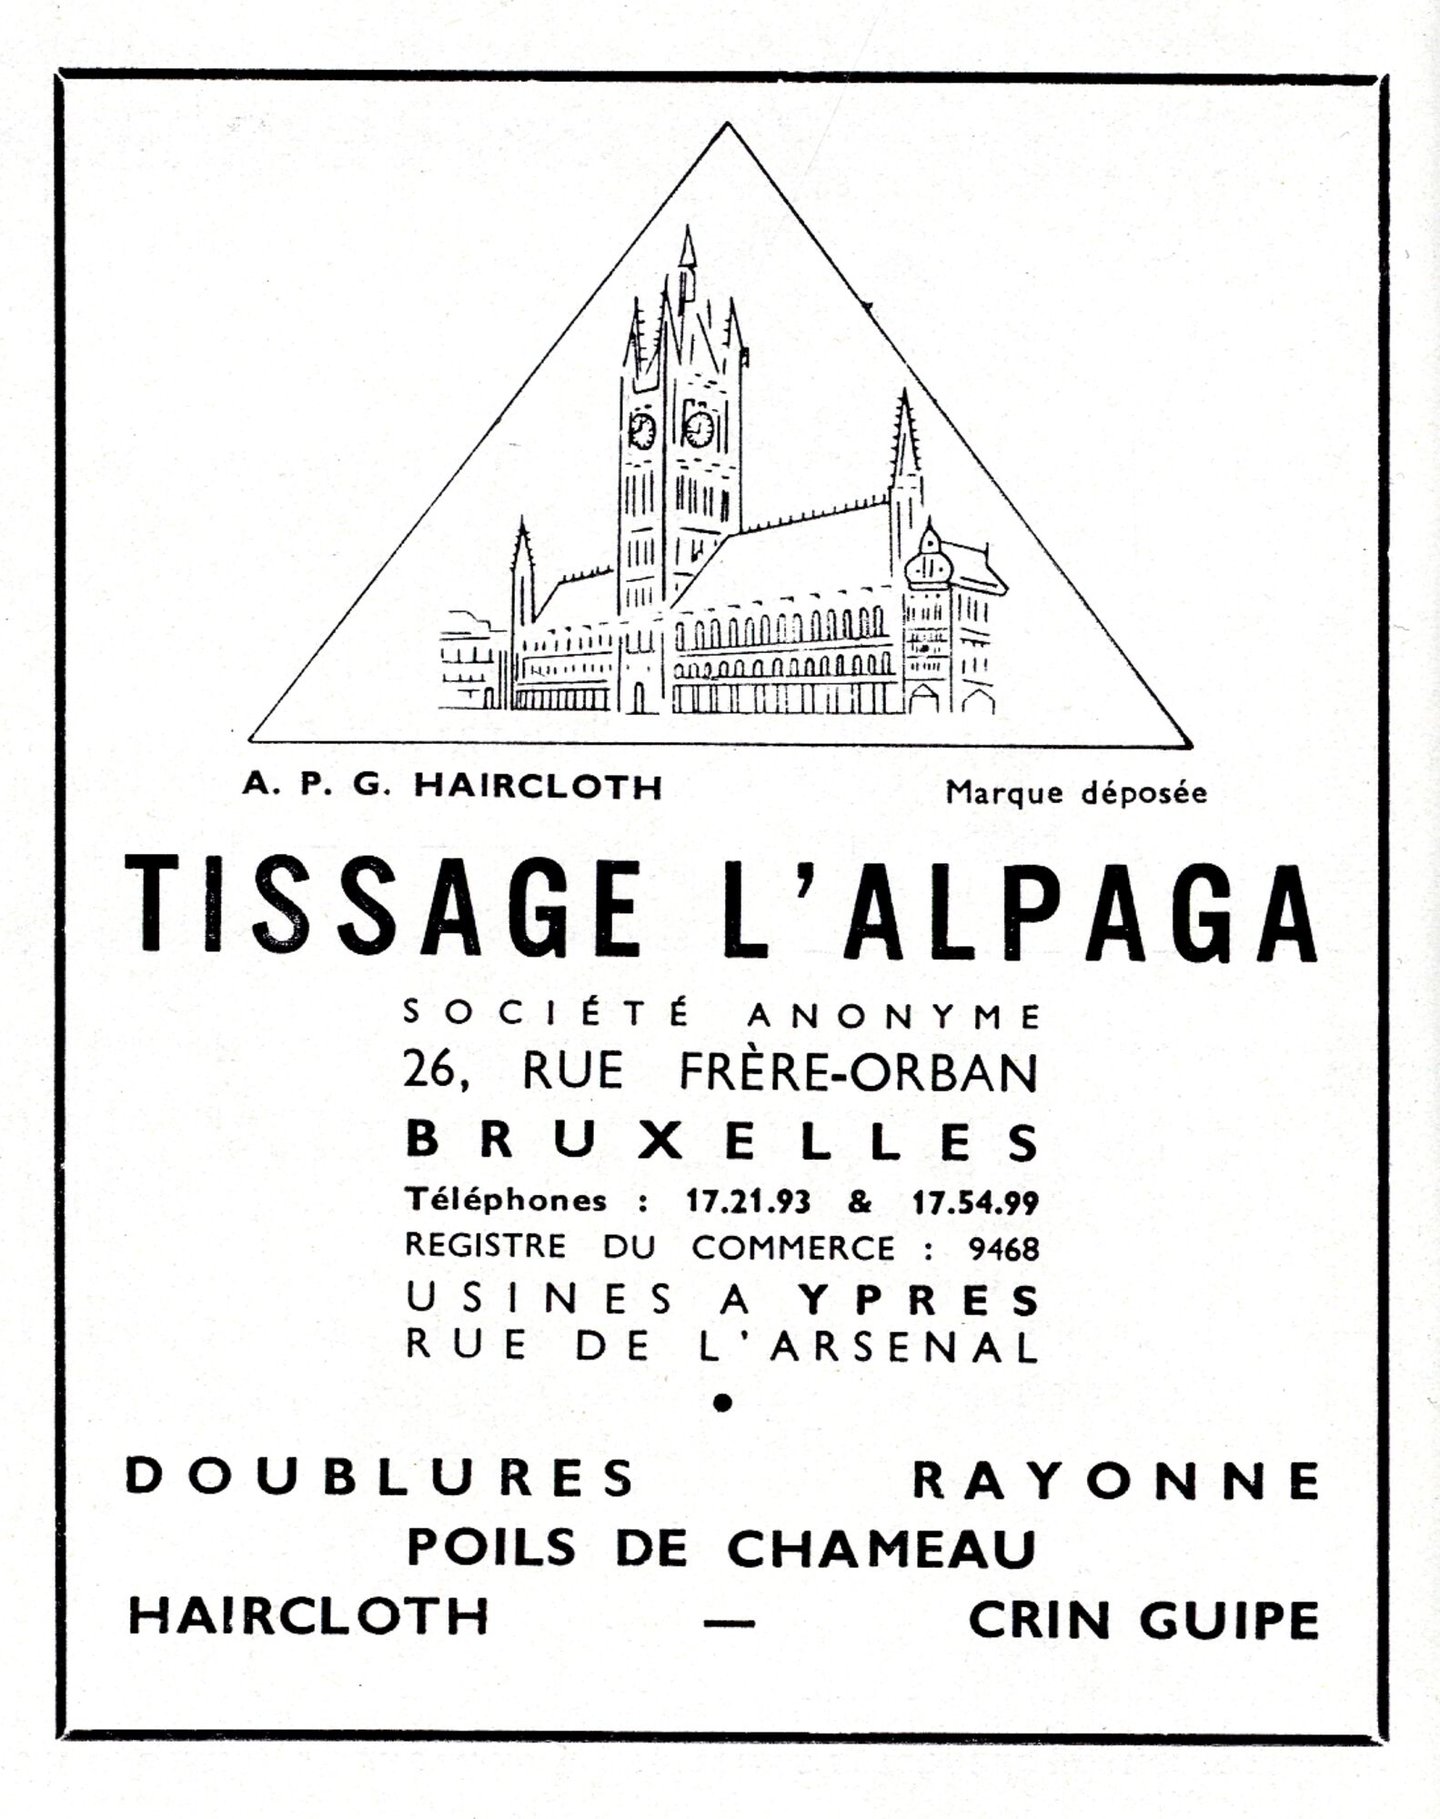 Reclame voor textielfabriek Tissage l'Alpaga